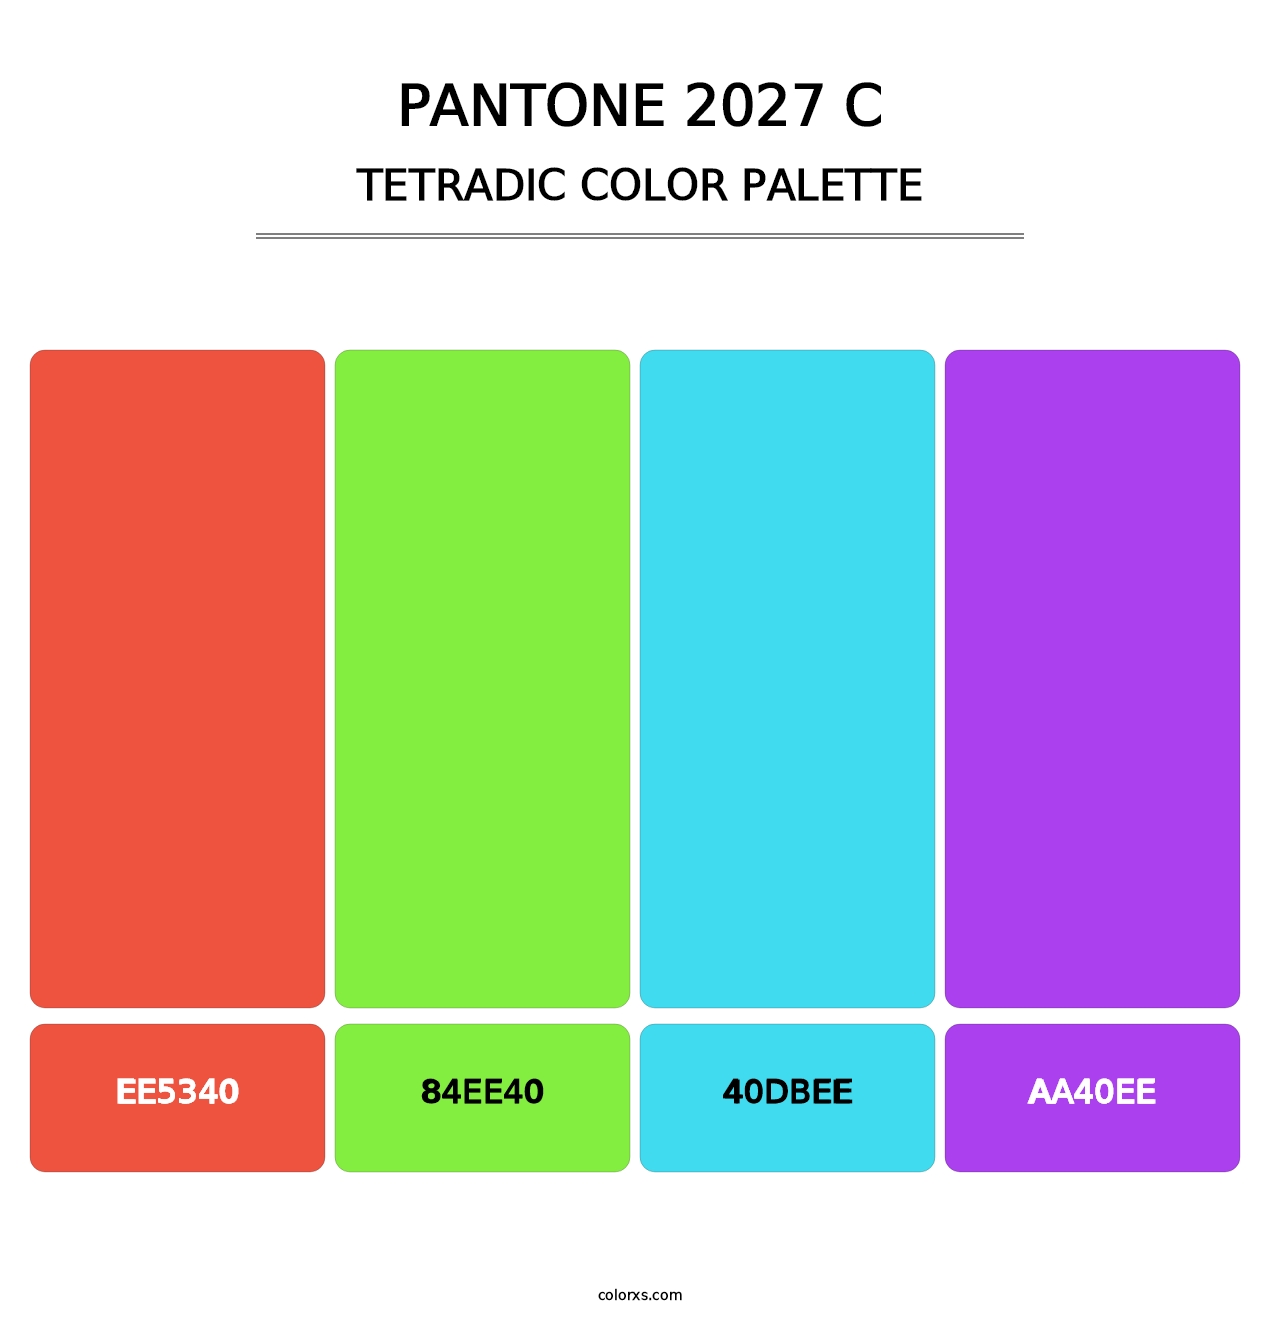 PANTONE 2027 C - Tetradic Color Palette